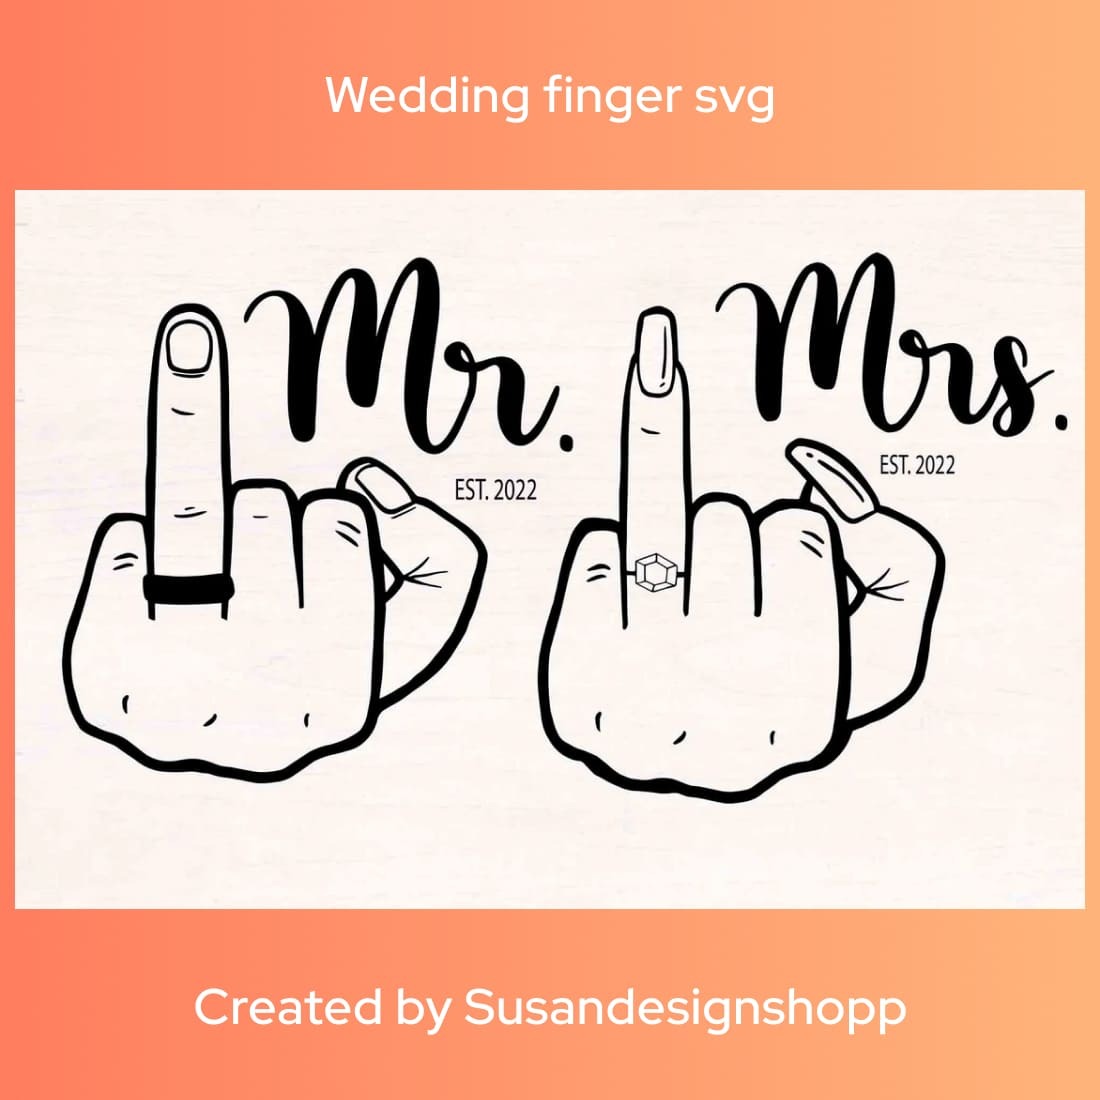 Wedding finger svg main cover.